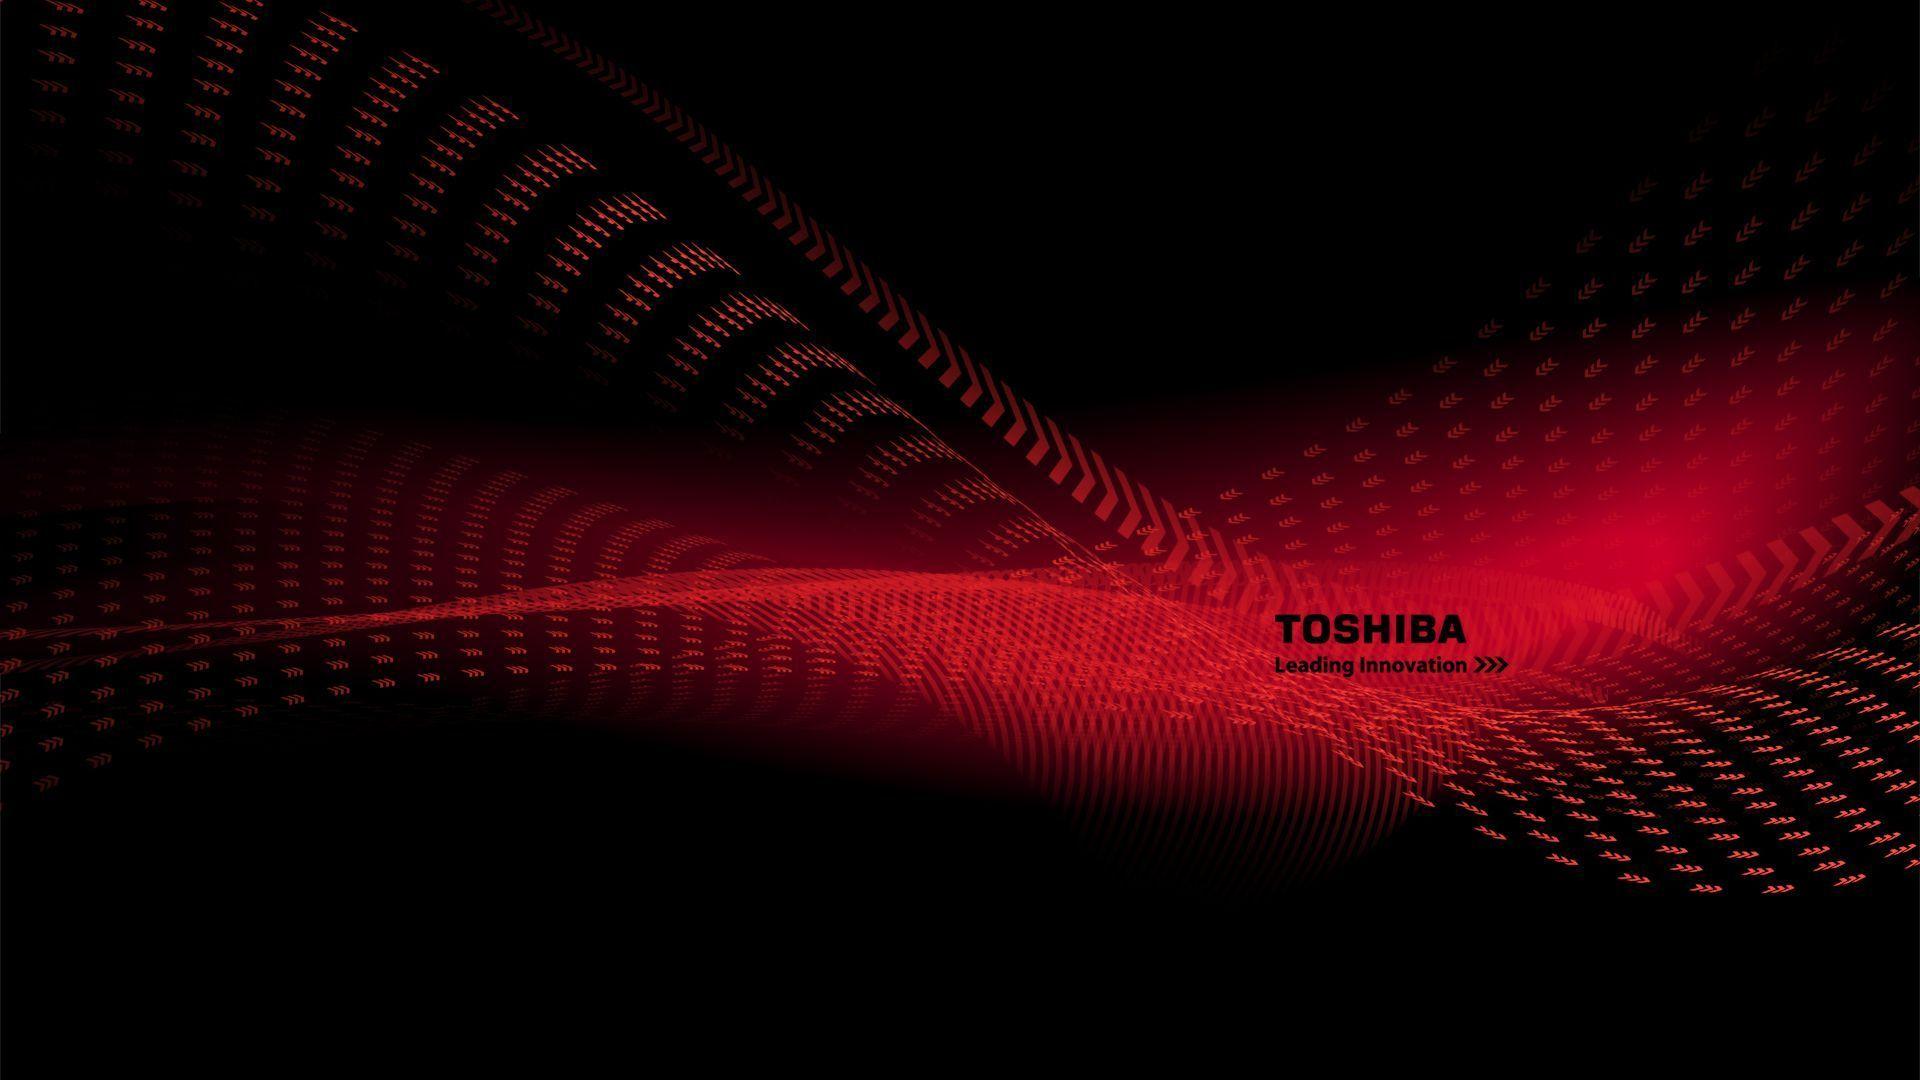 Toshiba Wallpaper 21038 1920x1080 px